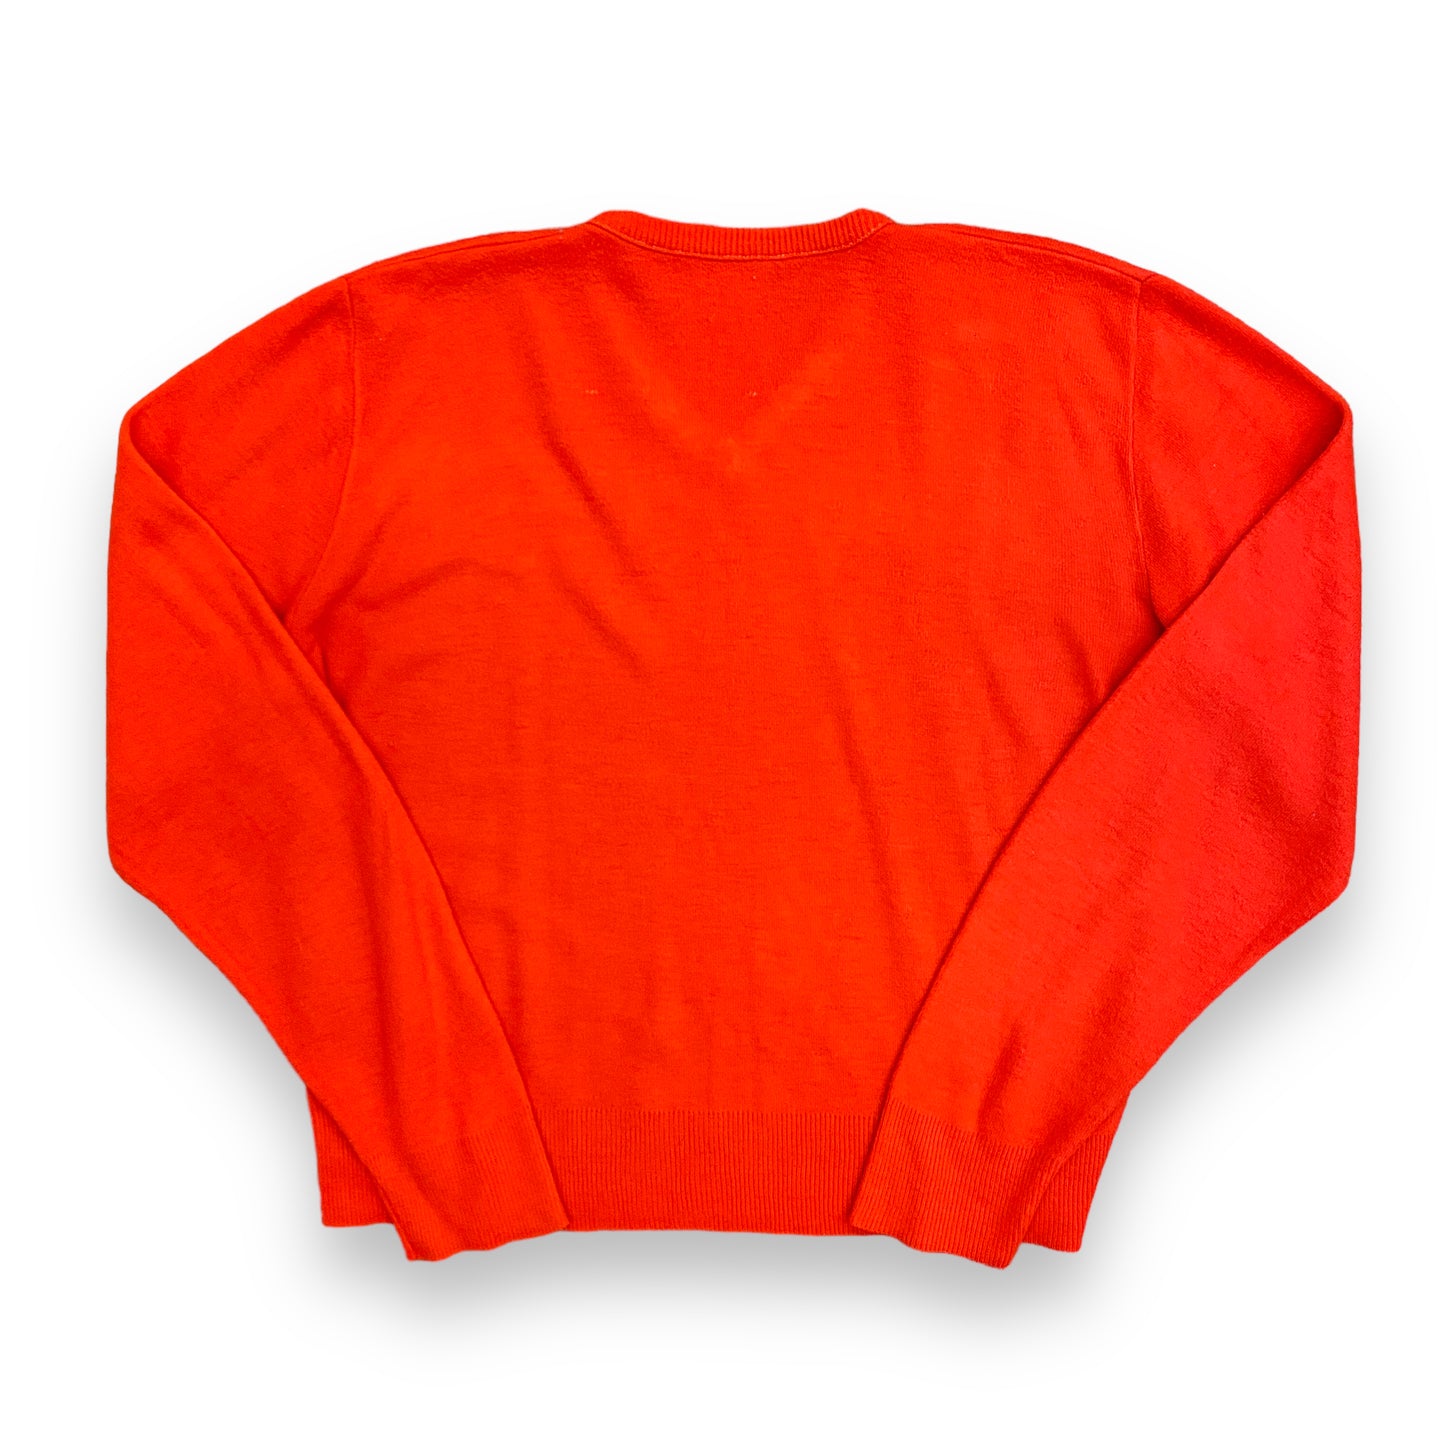 1980s Acrylic Red V-Neck Sweater - Size Large